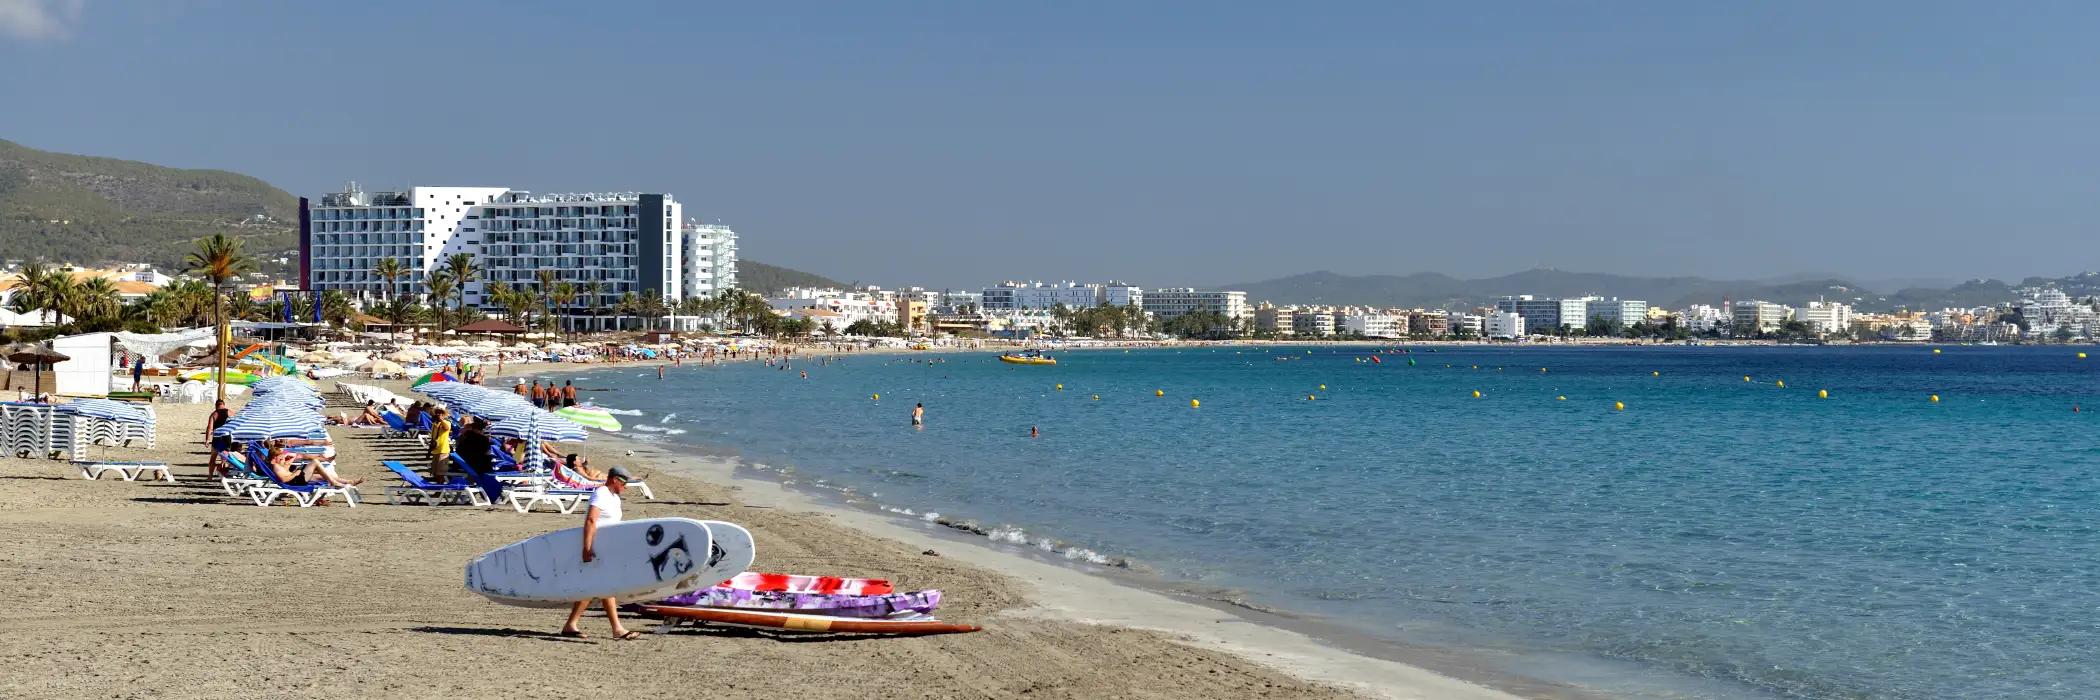 All inclusive holidays to Ibiza, Ibiza